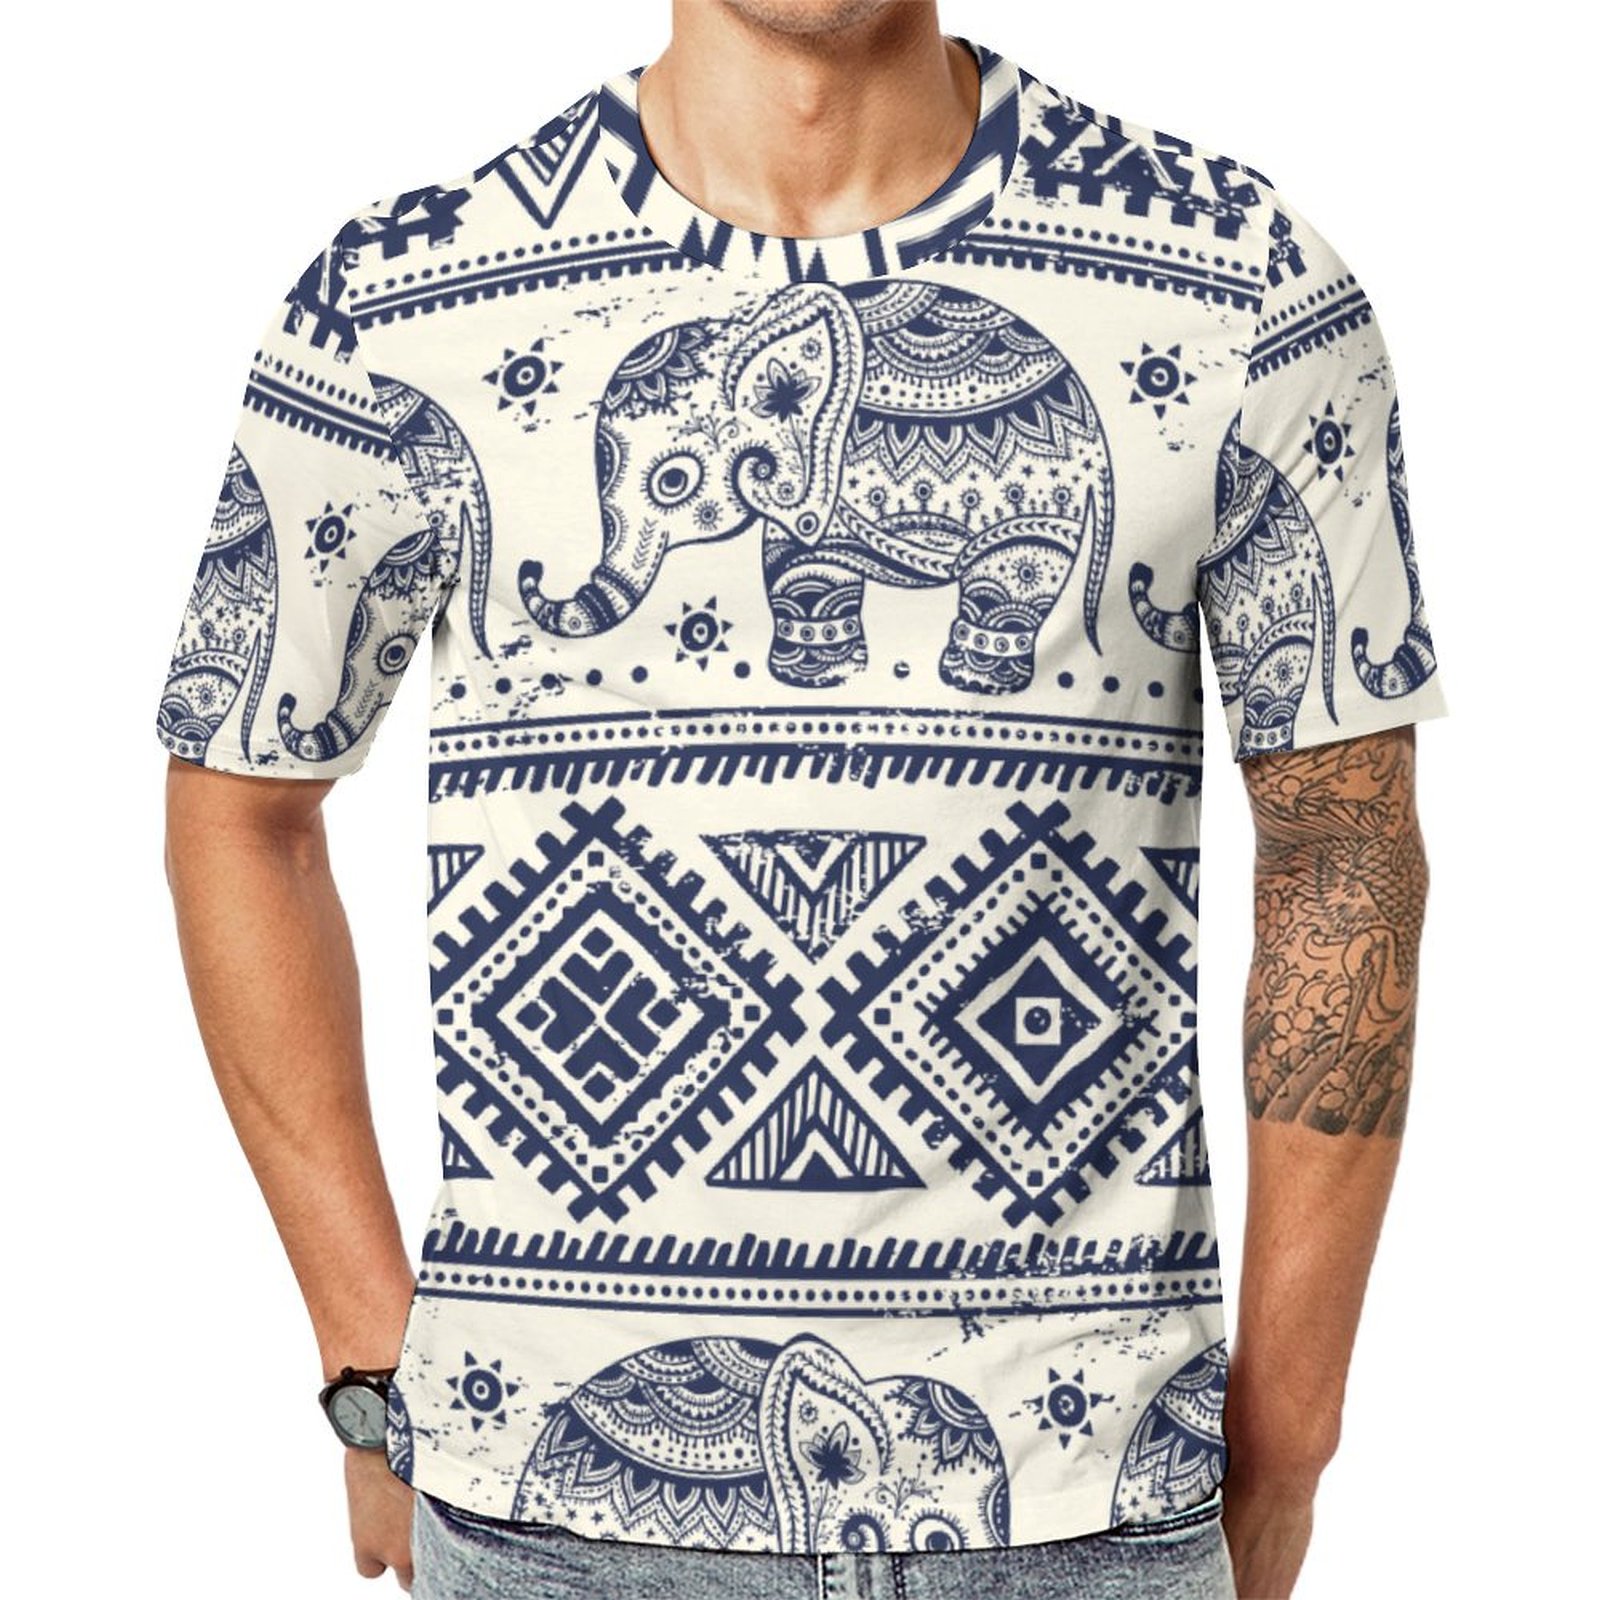 Ethnic Tribal Aztec Elephant Short Sleeve Print Unisex Tshirt Summer Casual Tees for Men and Women Coolcoshirts